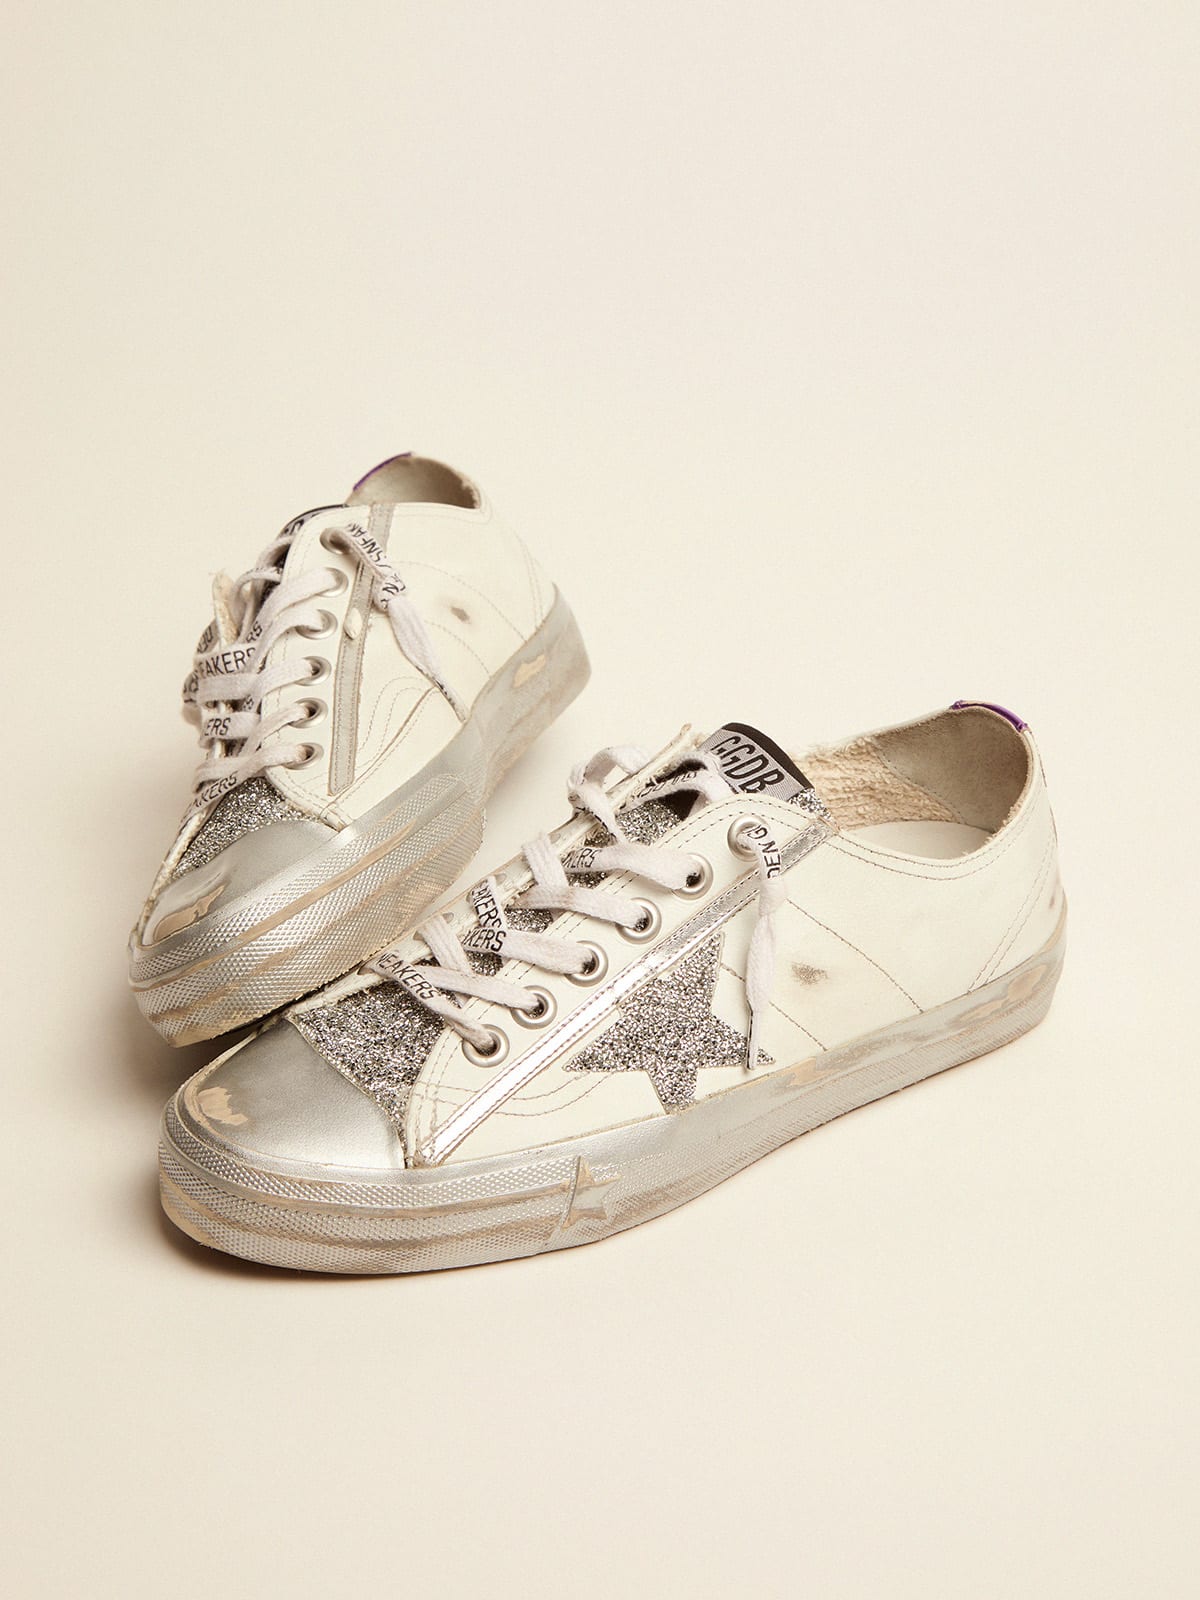 Golden Goose - Sneaker V-Star LTD in pelle bianca e cristalli Swarovski in 